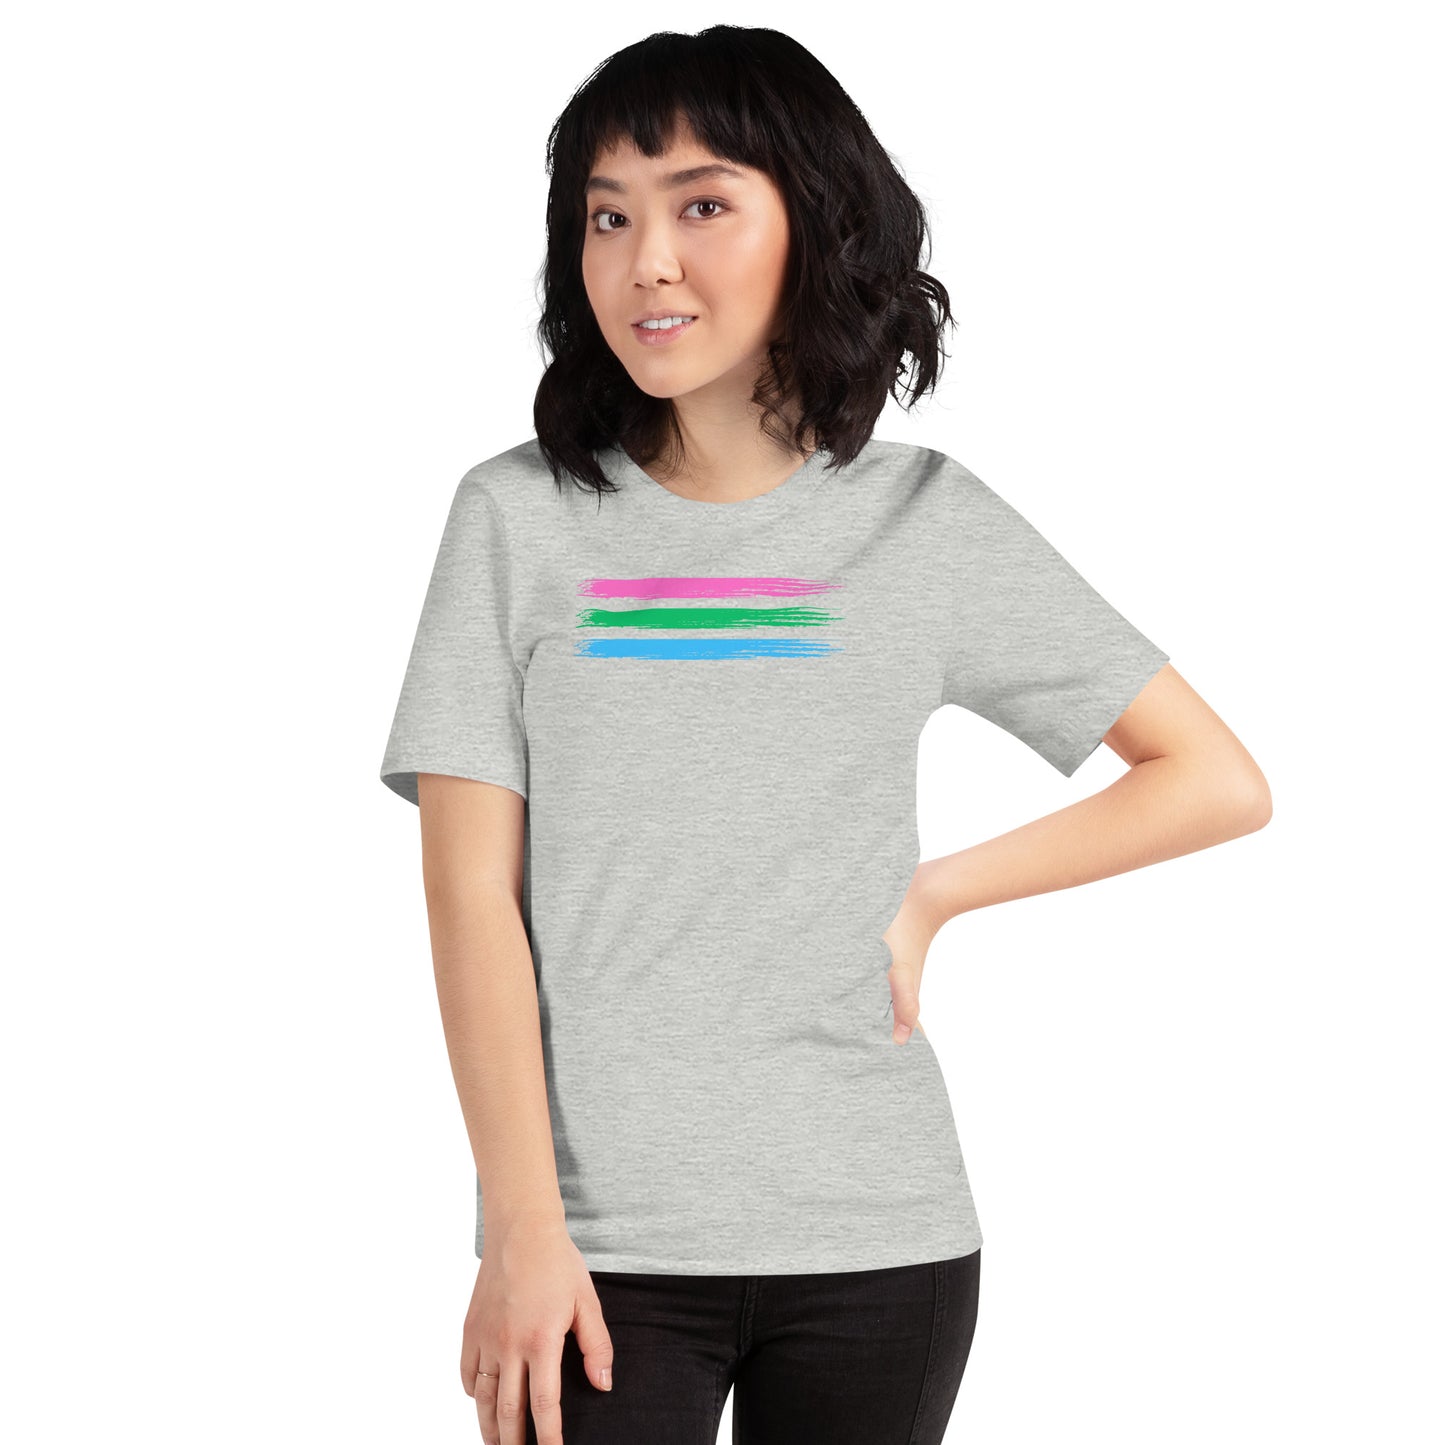 Polysexual Pride Flag unisex t-shirt